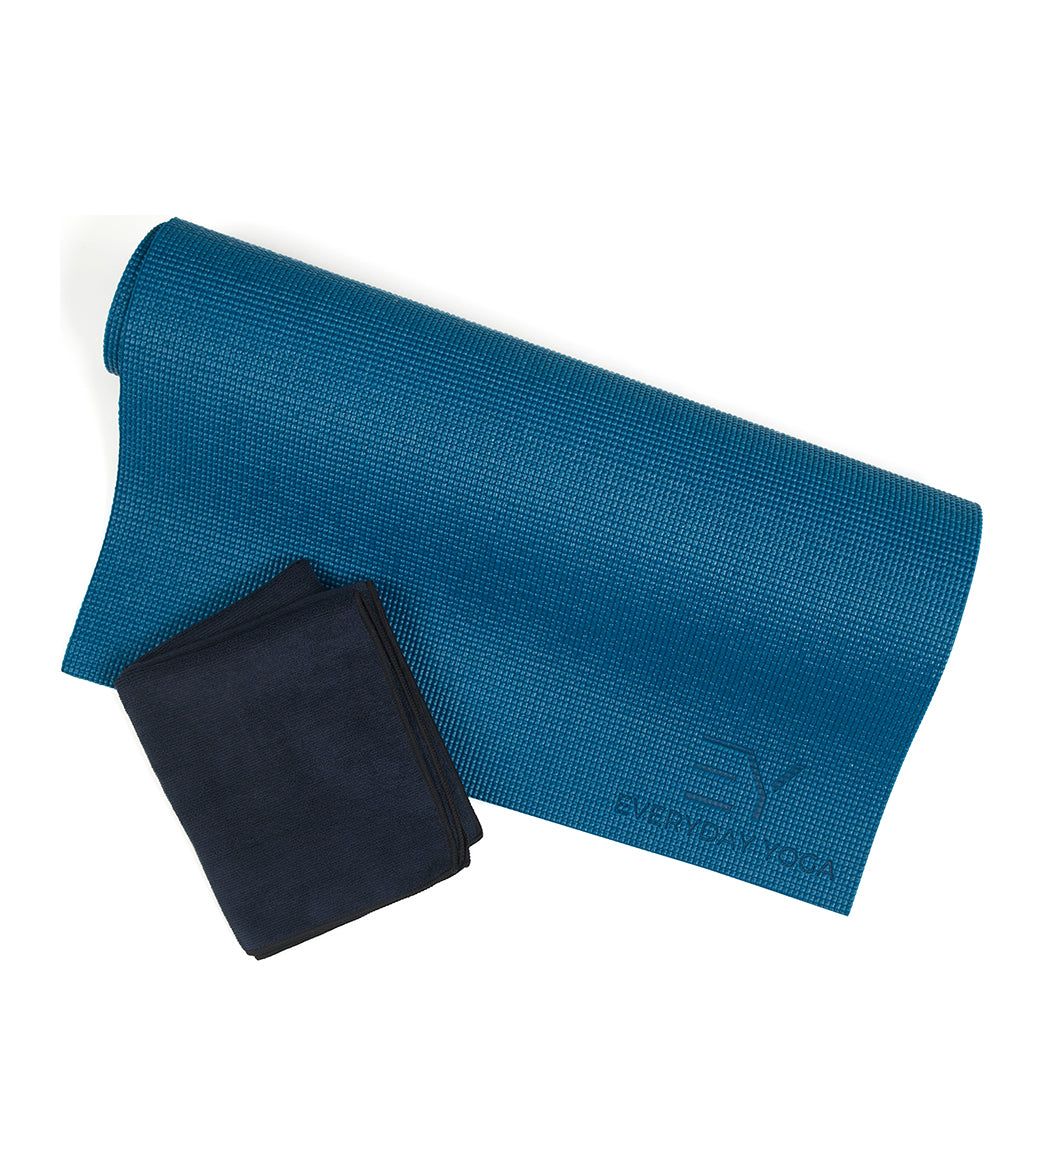 Yoga Set Kit 7-Piece 1 Yoga Mat, Yoga Mat Towel, 2 Yoga Blocks, Yoga Strap,  Yoga Hand Towel, Free Carry Case - Perfect Yoga Gift for Exercises Yogis  and Seniors : 